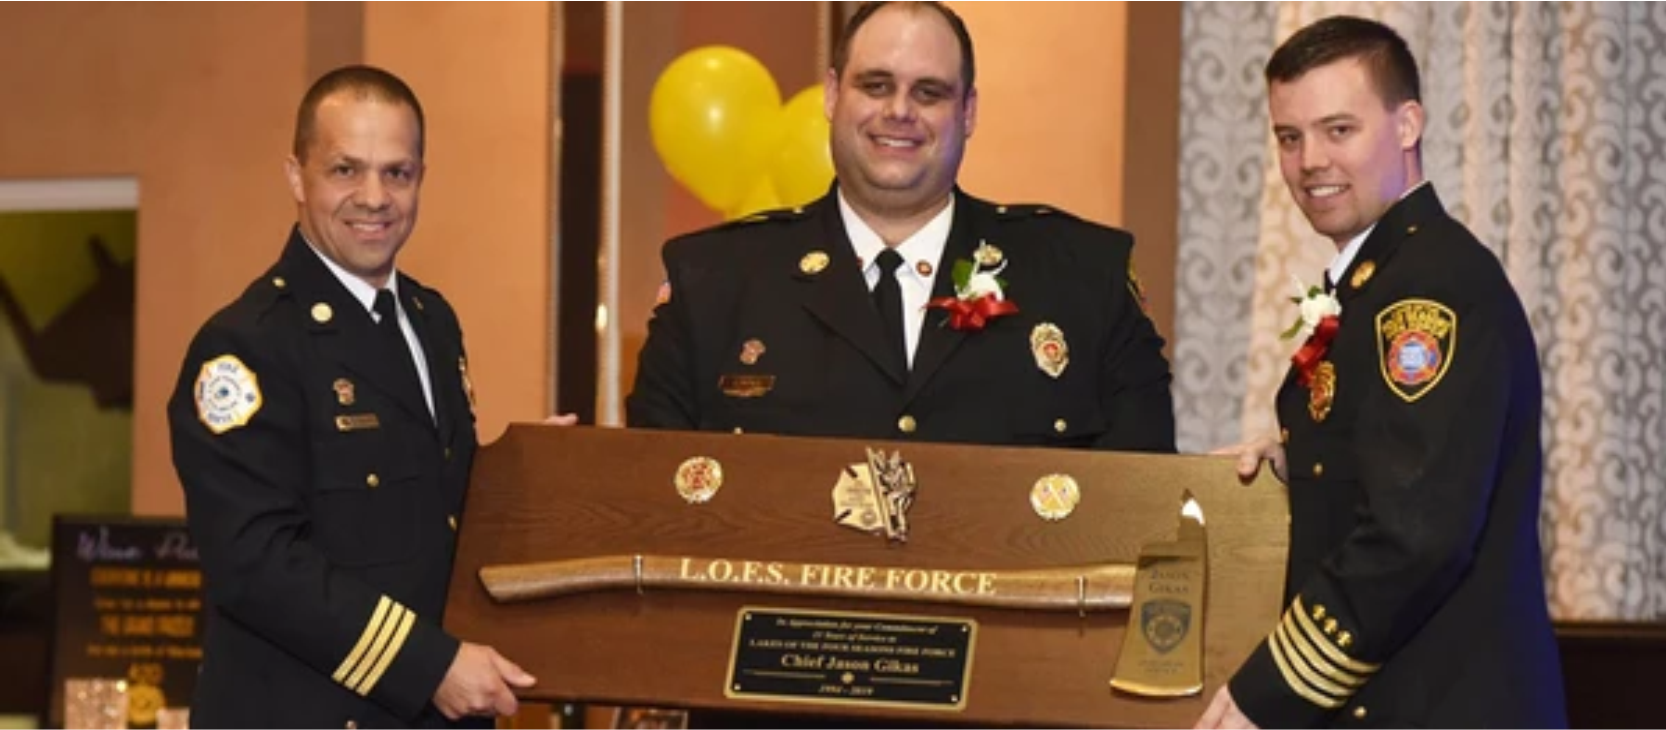 Firefighter Award Ceremonies